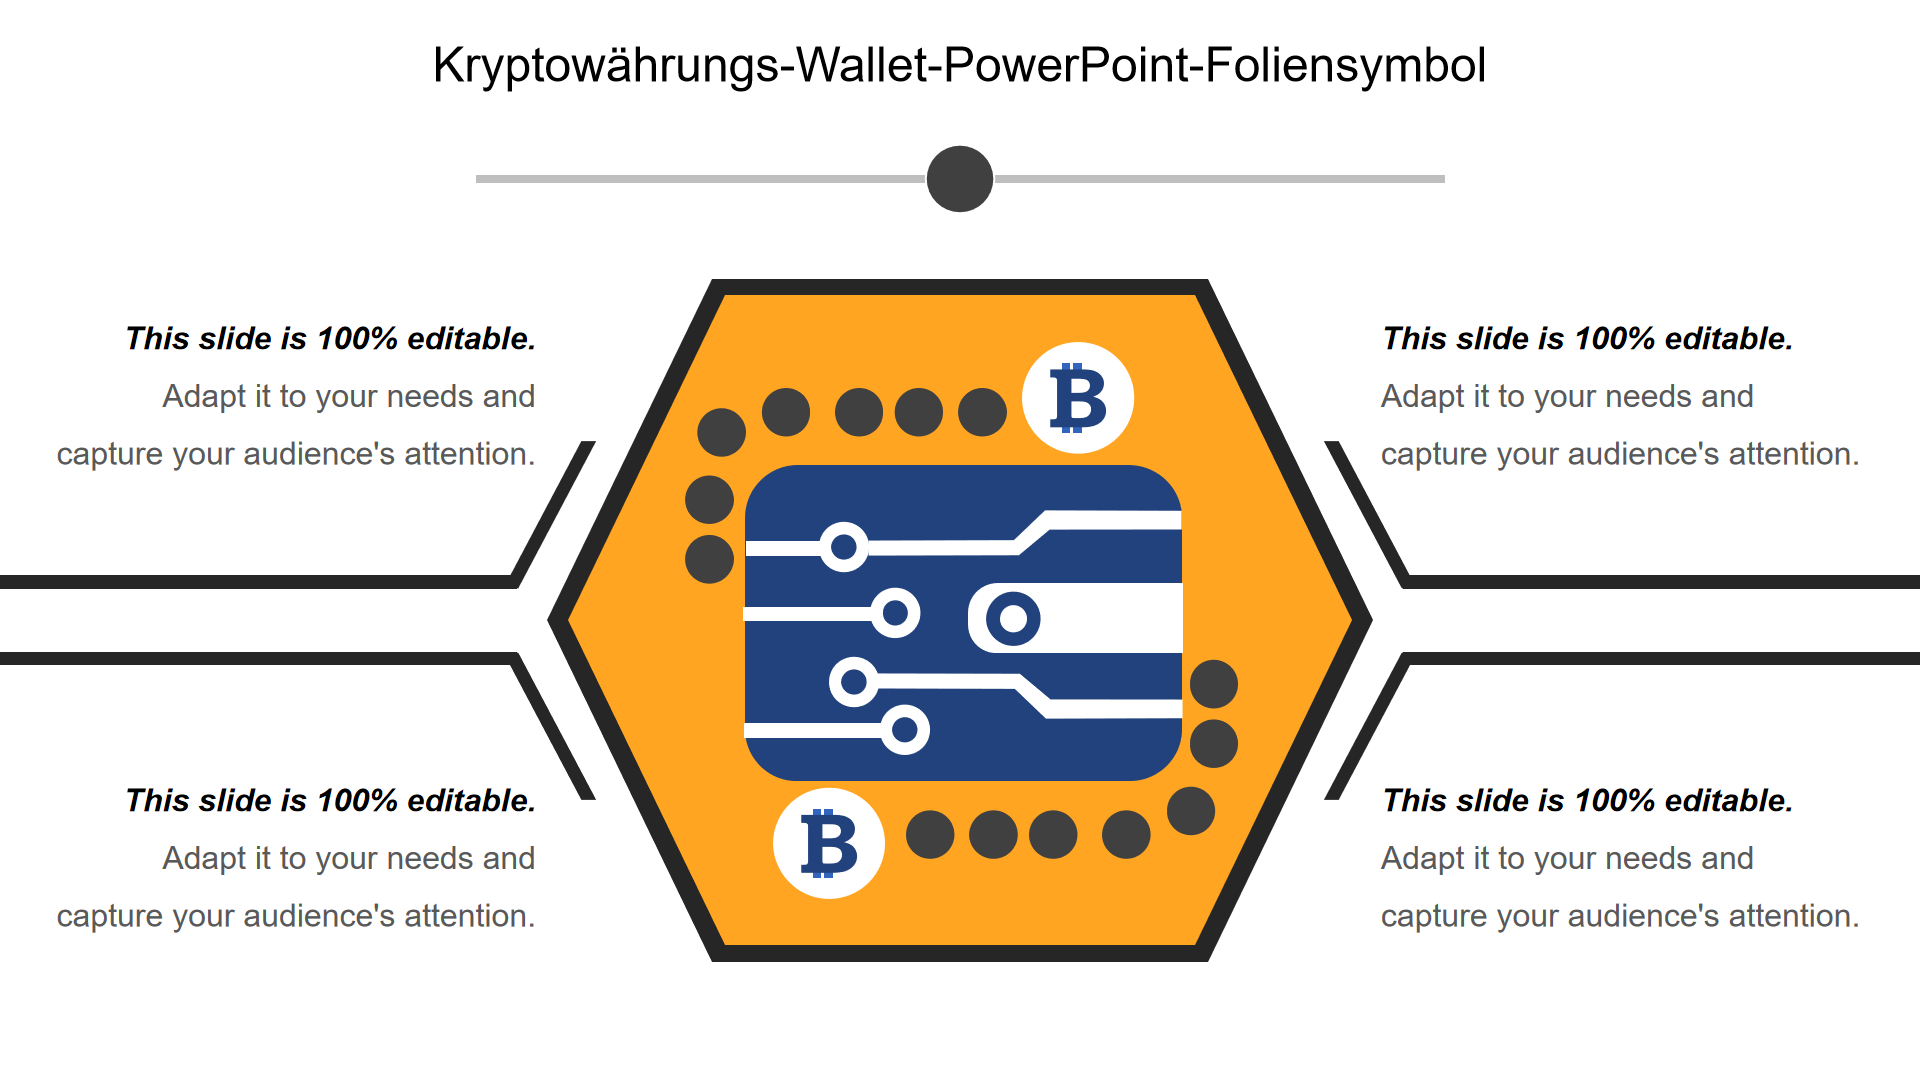 Kryptowährungs-Wallet-PowerPoint-Foliensymbol